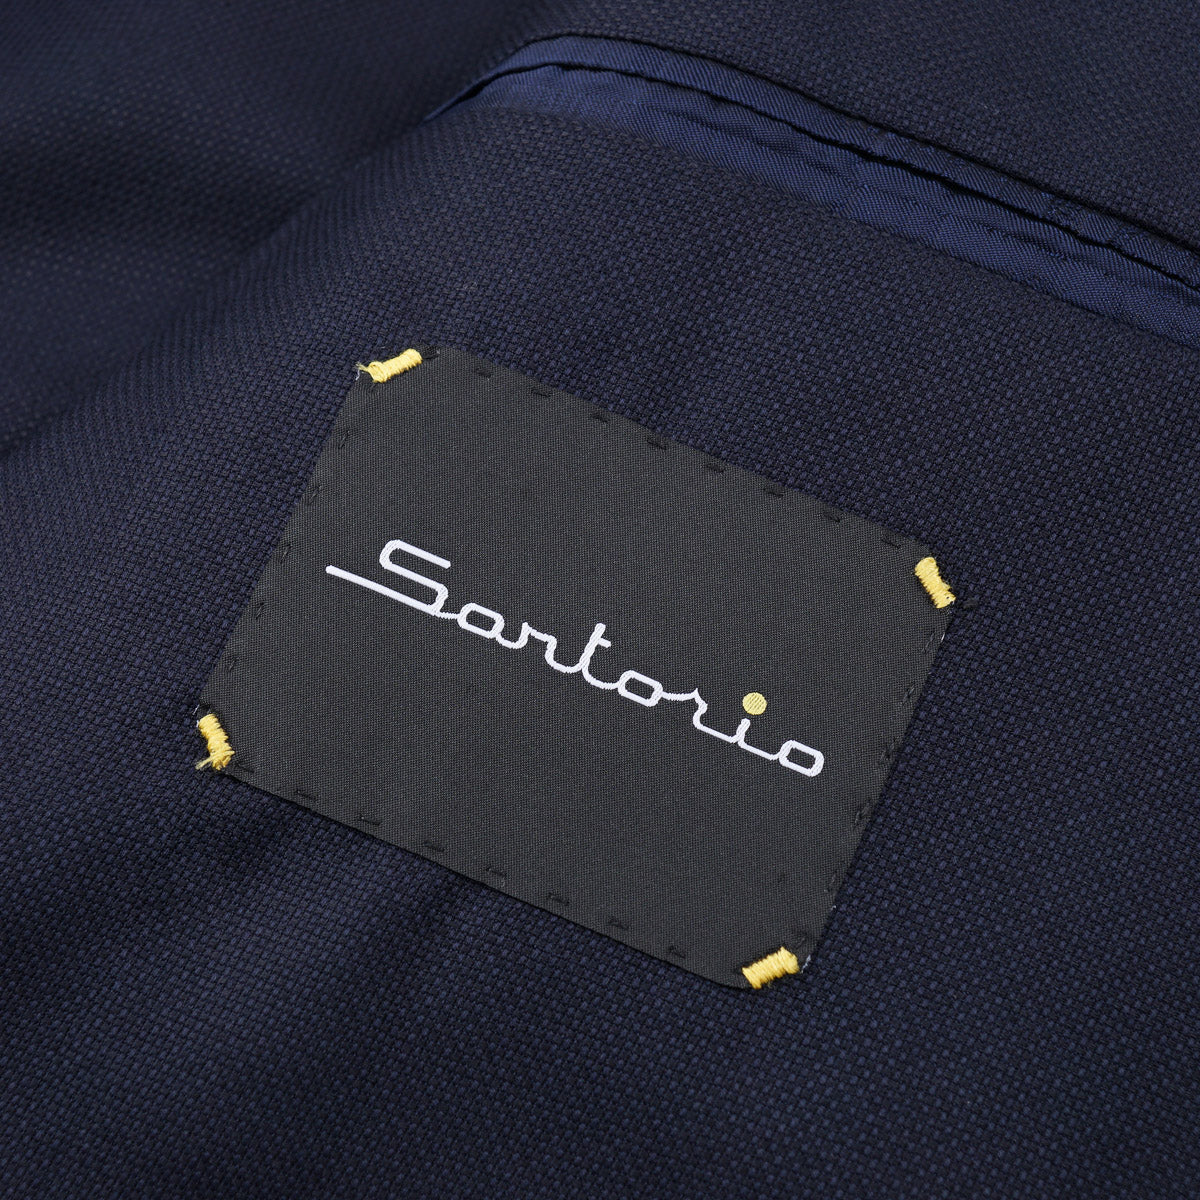 Sartorio Lightweight Woven Wool Sport Coat - Top Shelf Apparel